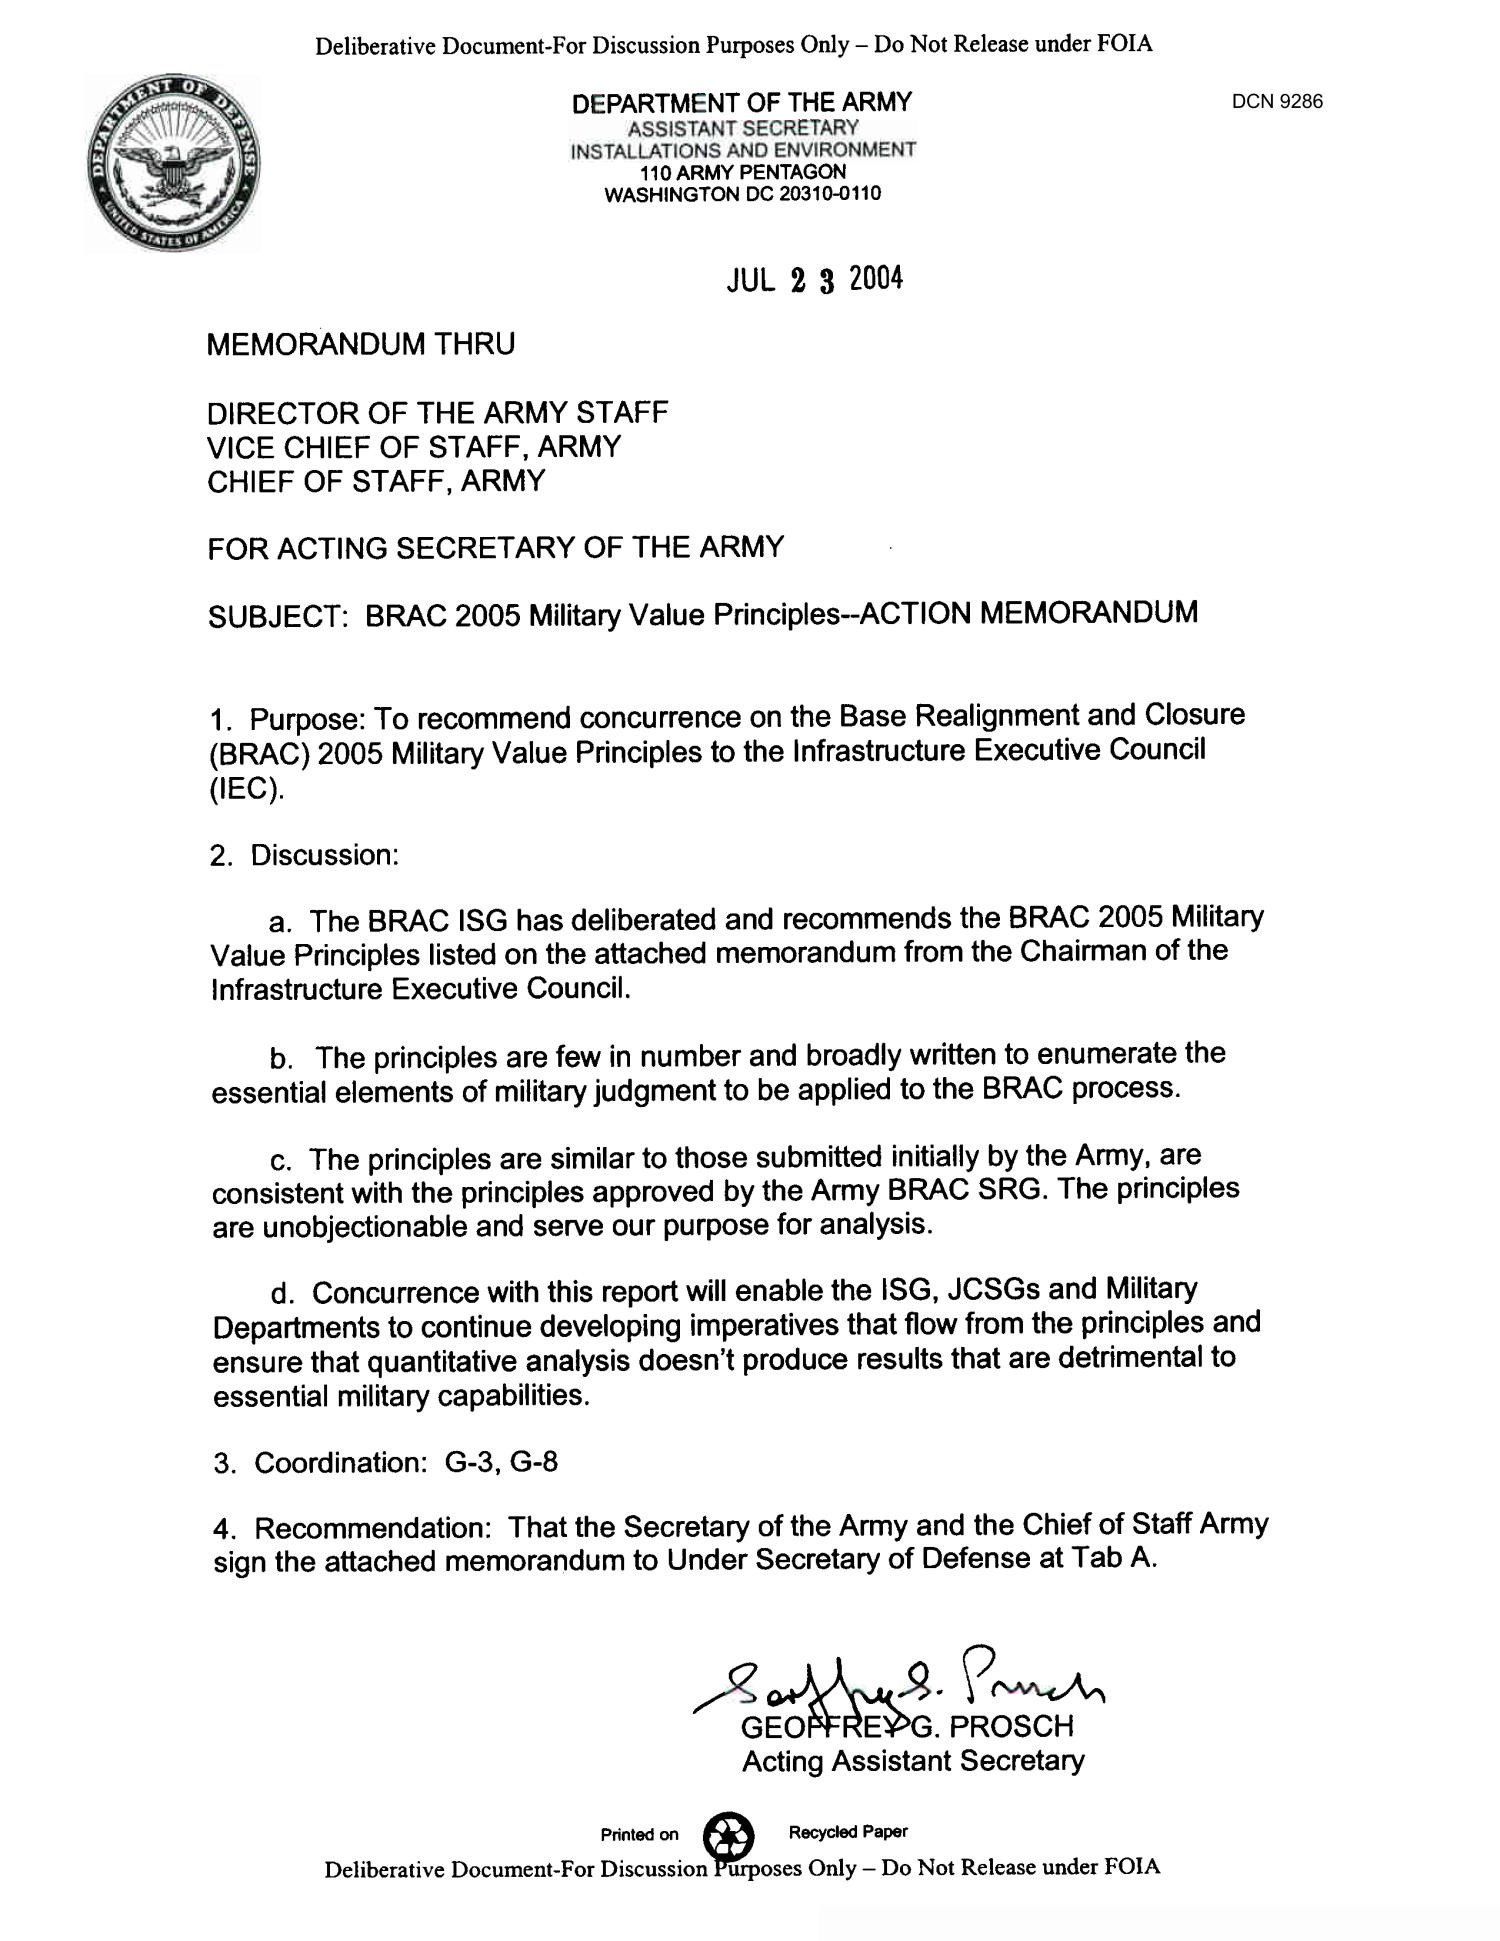 Memorandum for the Acting Secretary of the Army BRAC 2005